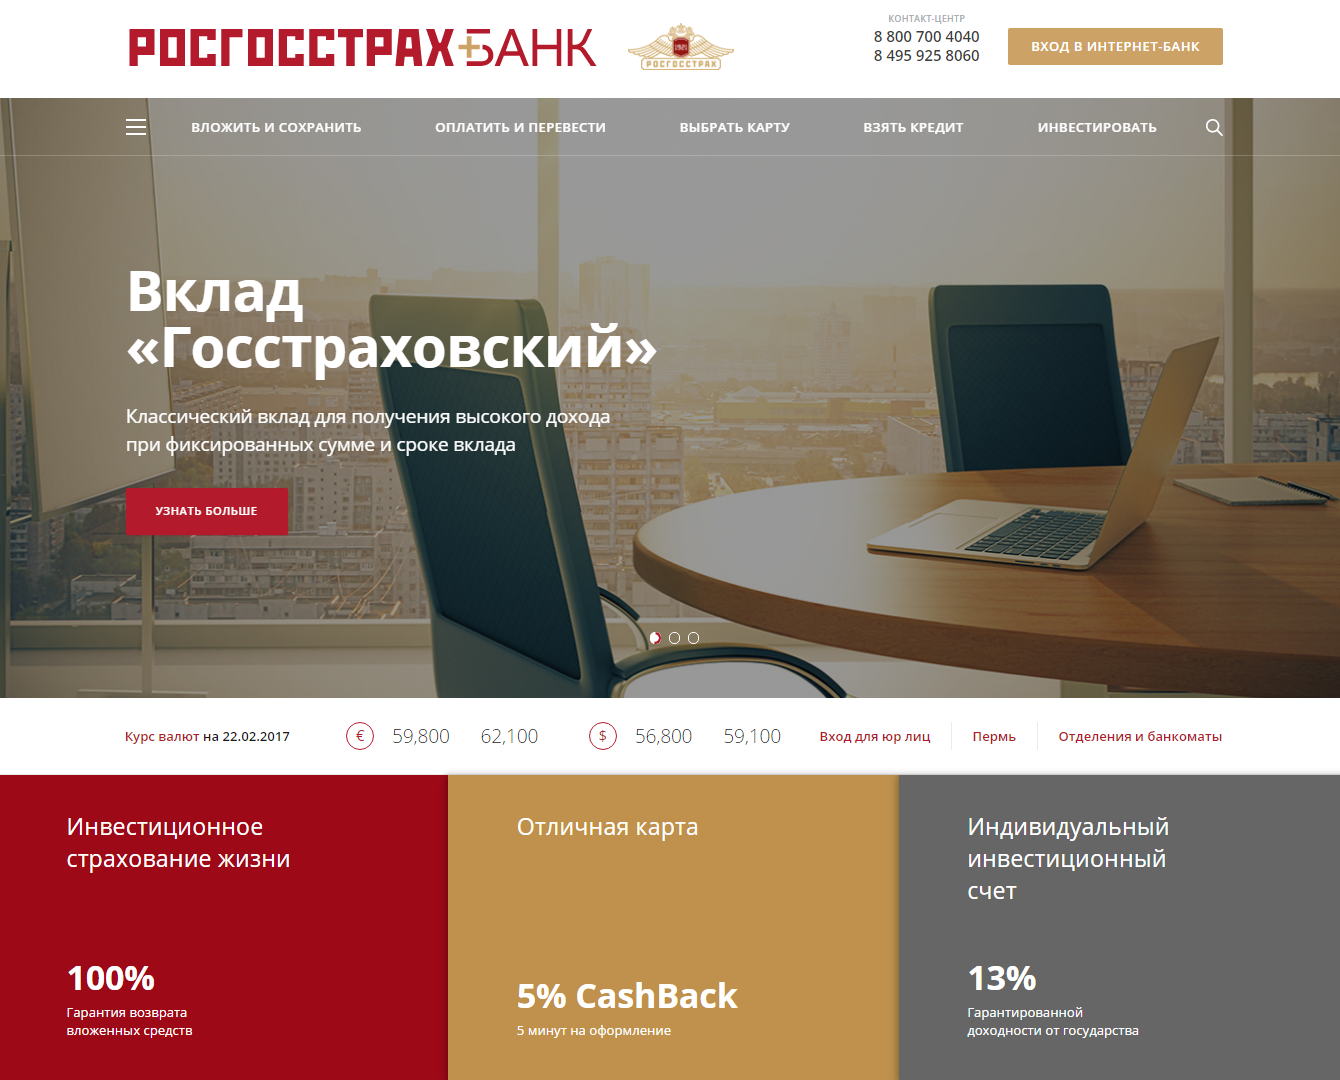 Банк россии онлайн заявка на кредит